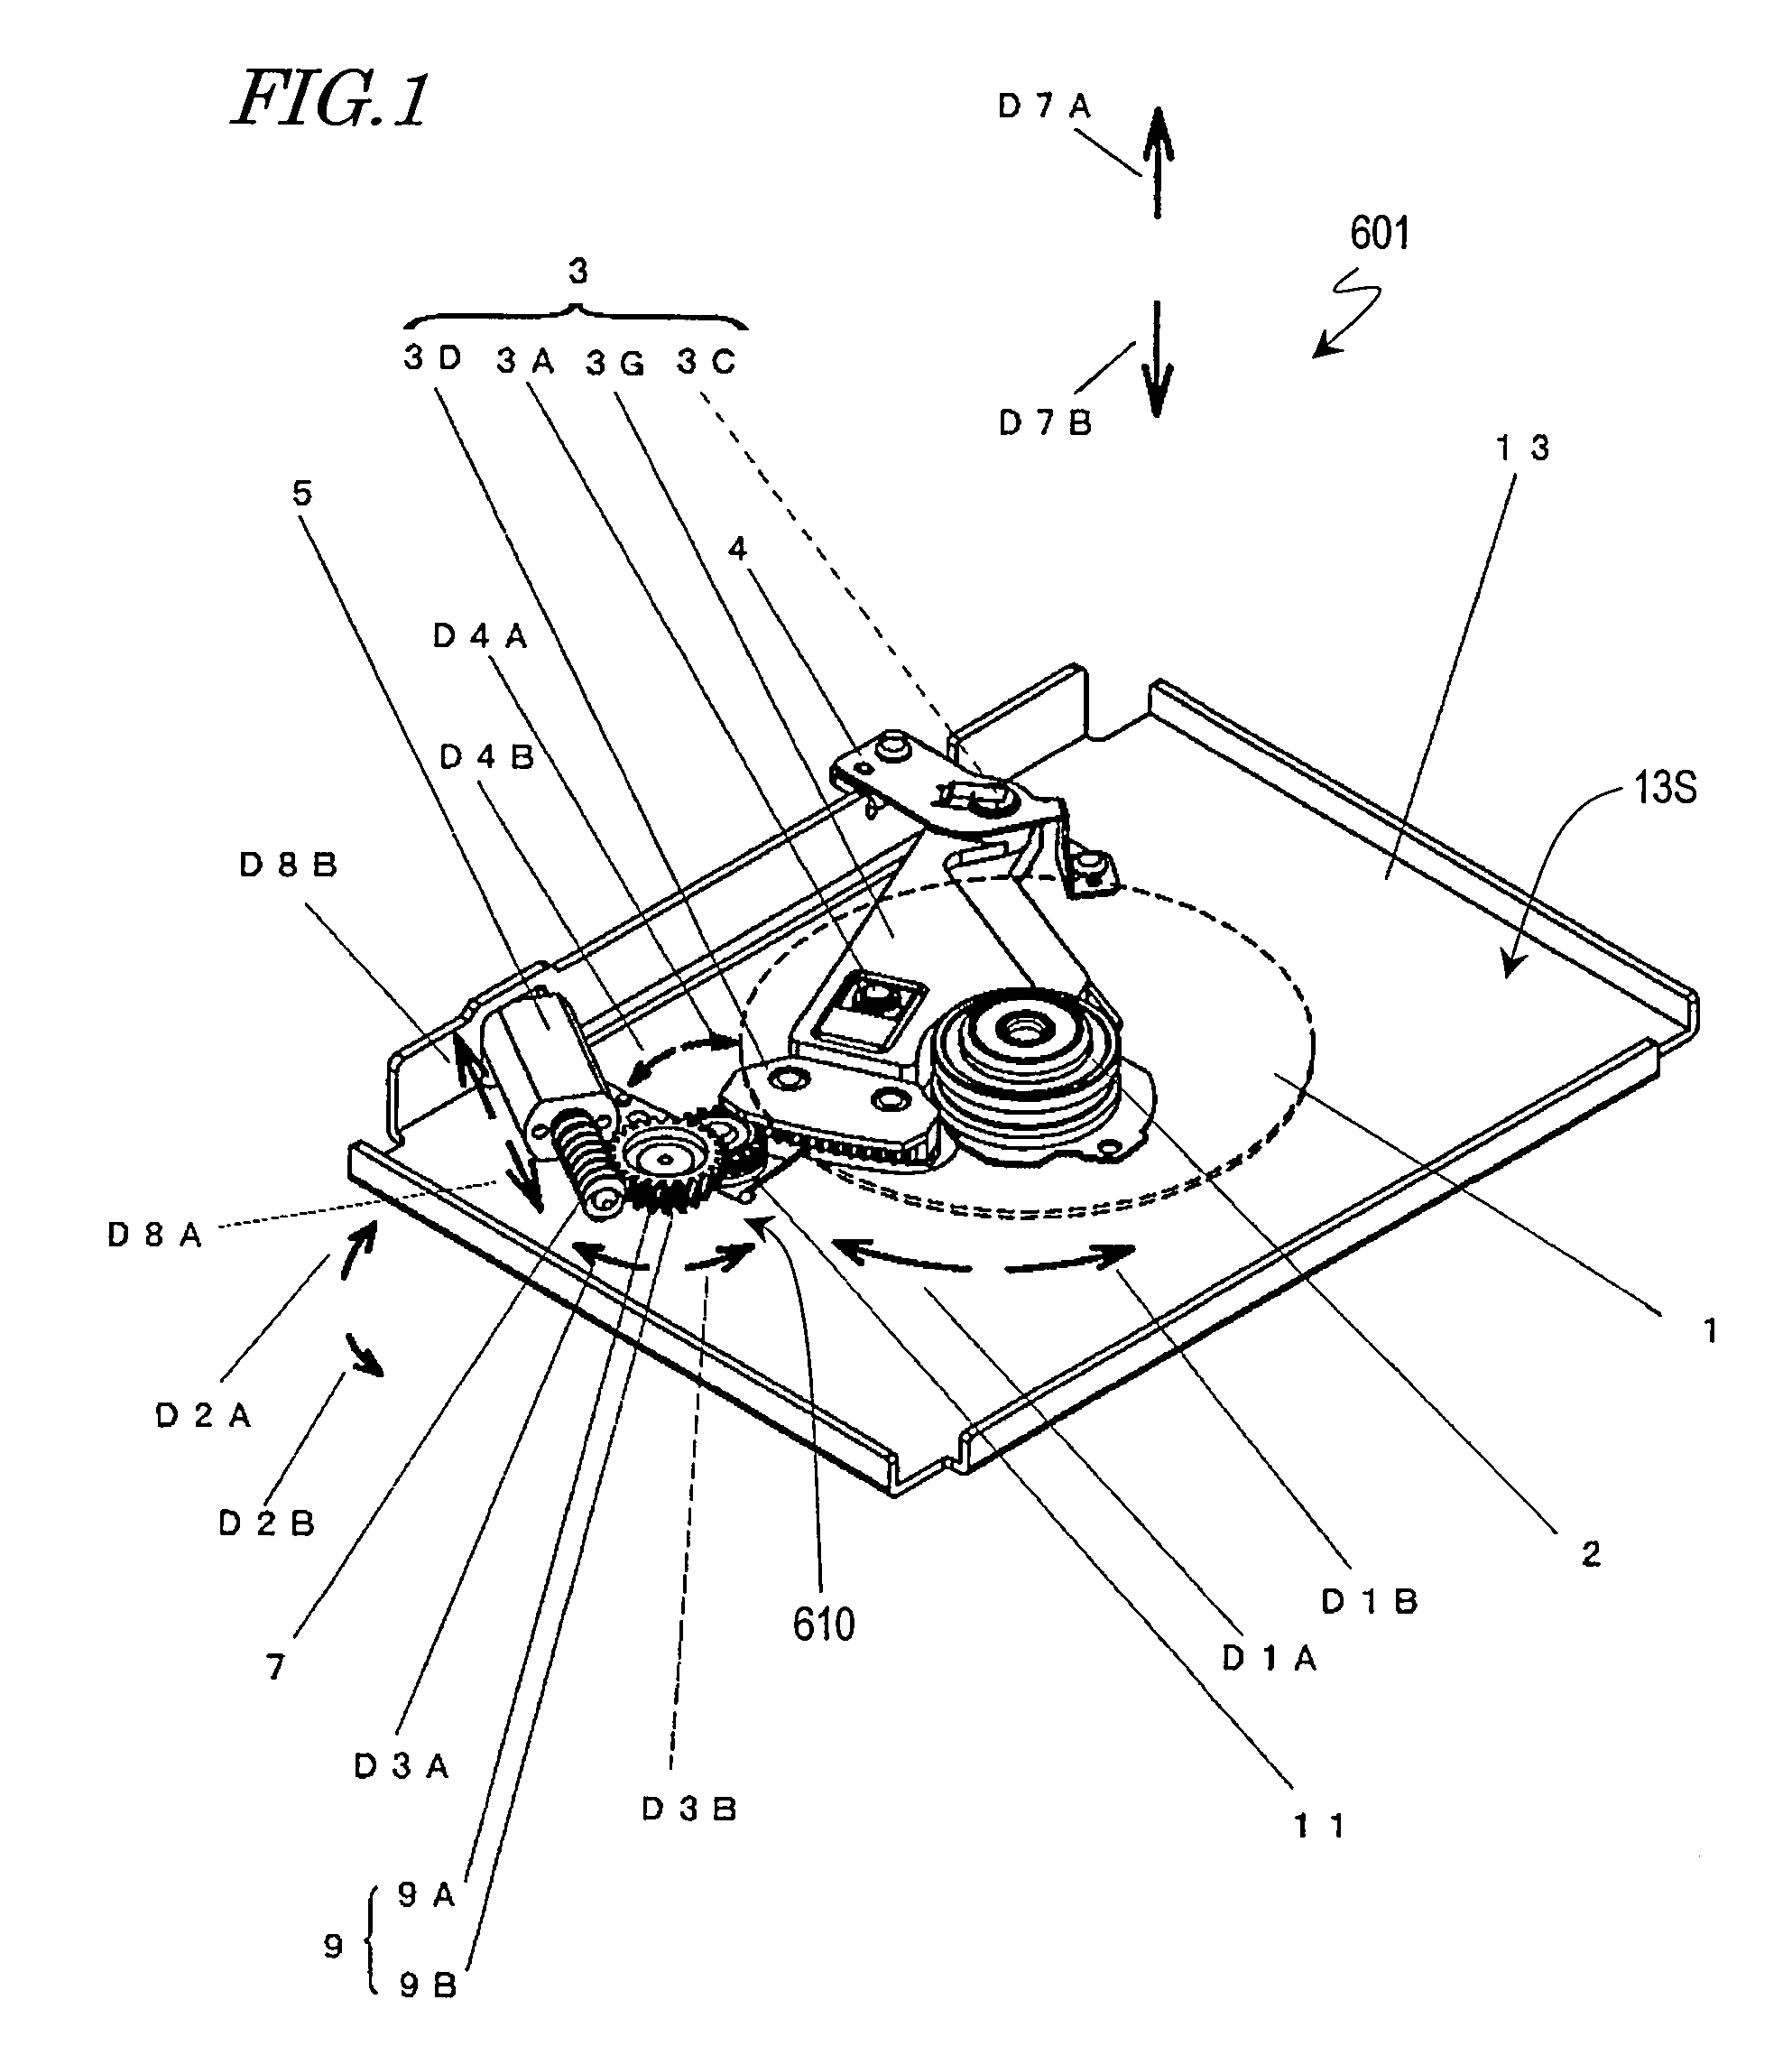 Optical disc device